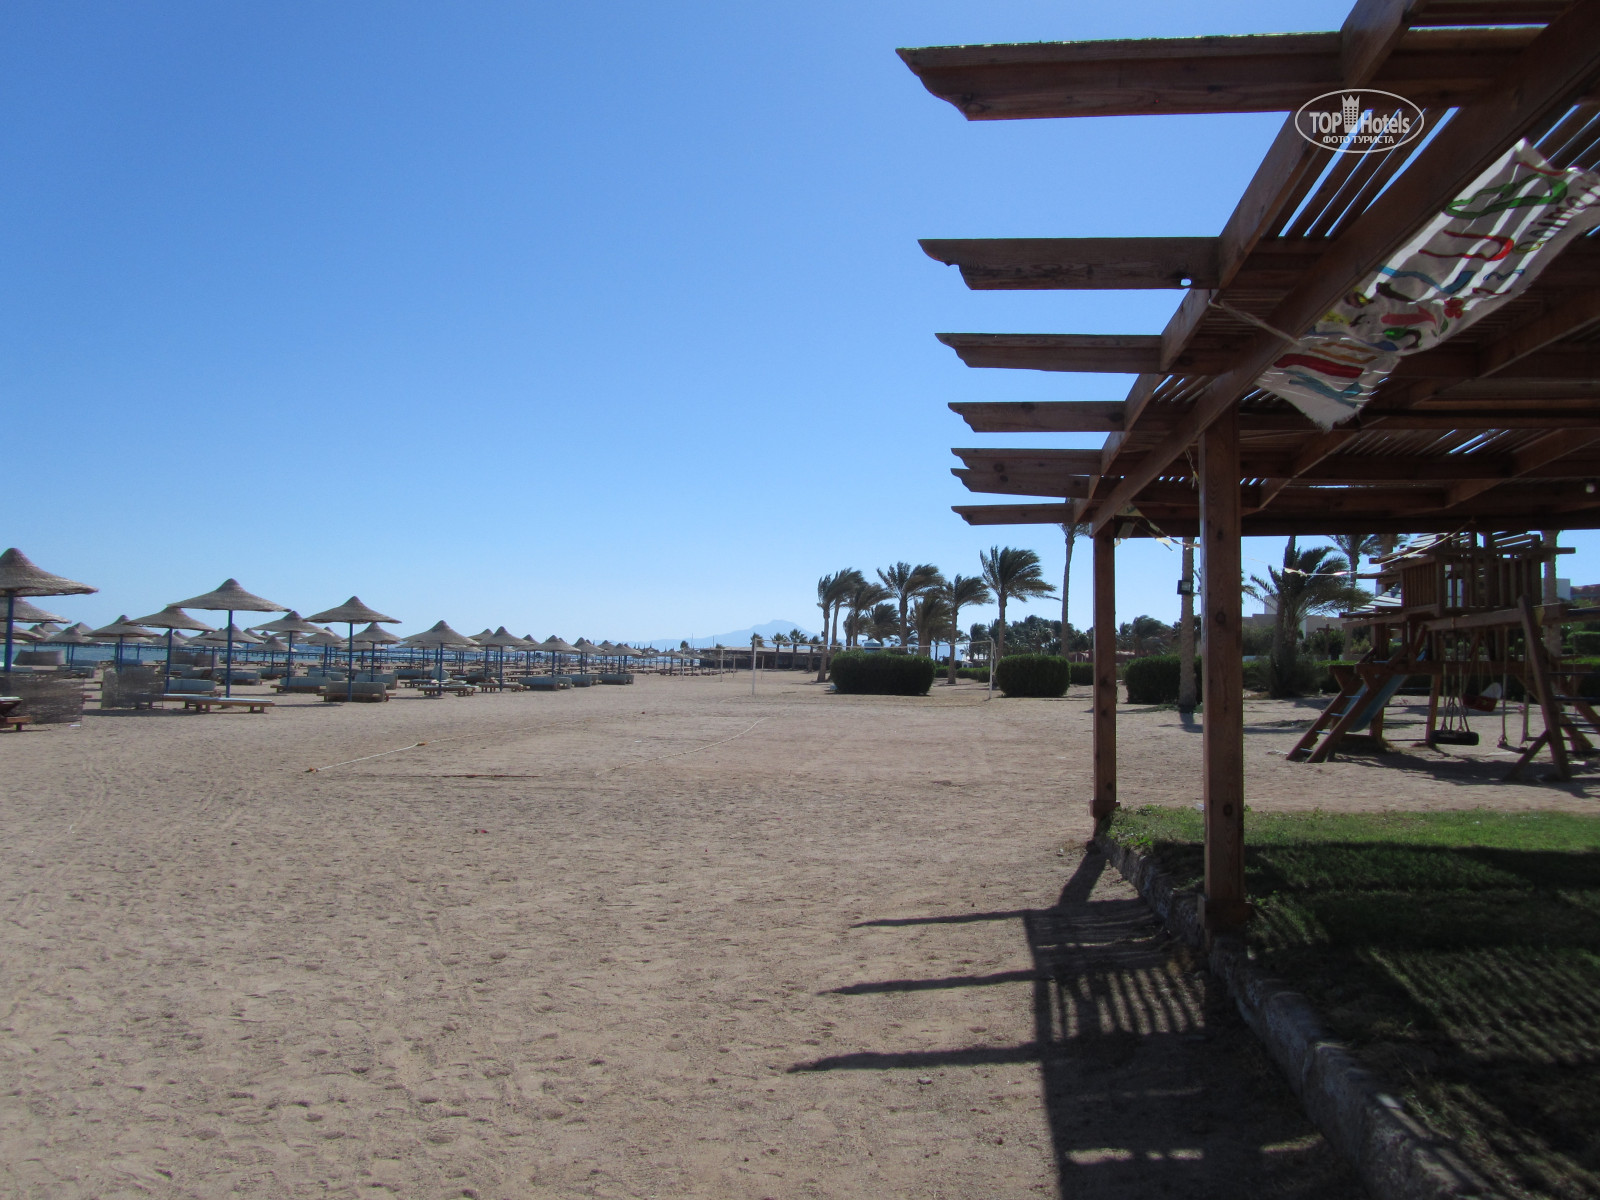 Amwaj beach club resort. Amwaj Oyoun Resort Spa 5 пляж. Amwaj Oyoun Resort & Spa. Amwaj Oyoun Resort & Spa Sharm el Sheikh. 5*. Amwaj Oyoun Resort & Spa АА Амвадж отель пляж.